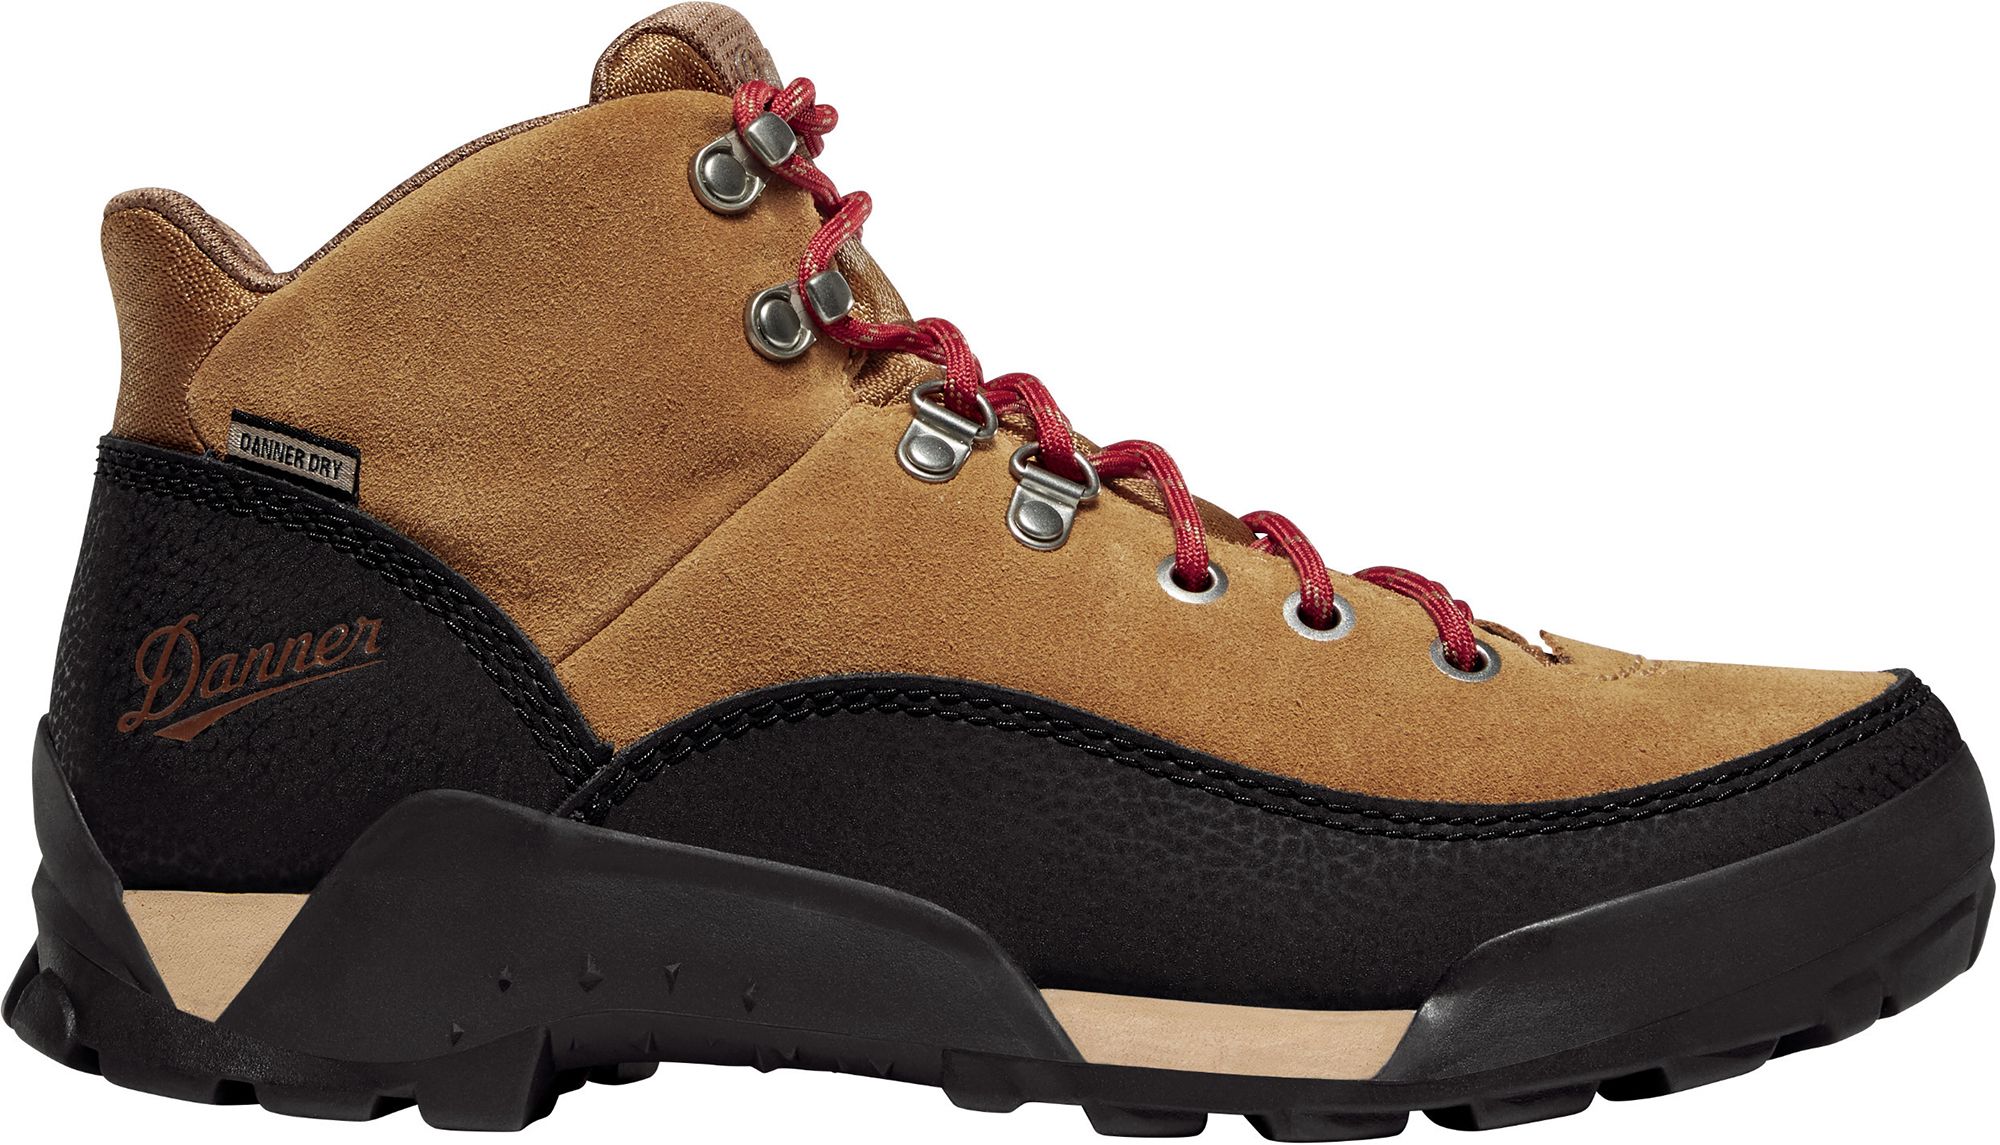 Photos - Trekking Shoes Danner Women's Panorama 6" Waterproof Hiking Boots, Size 8, Brown/Red 22DA 